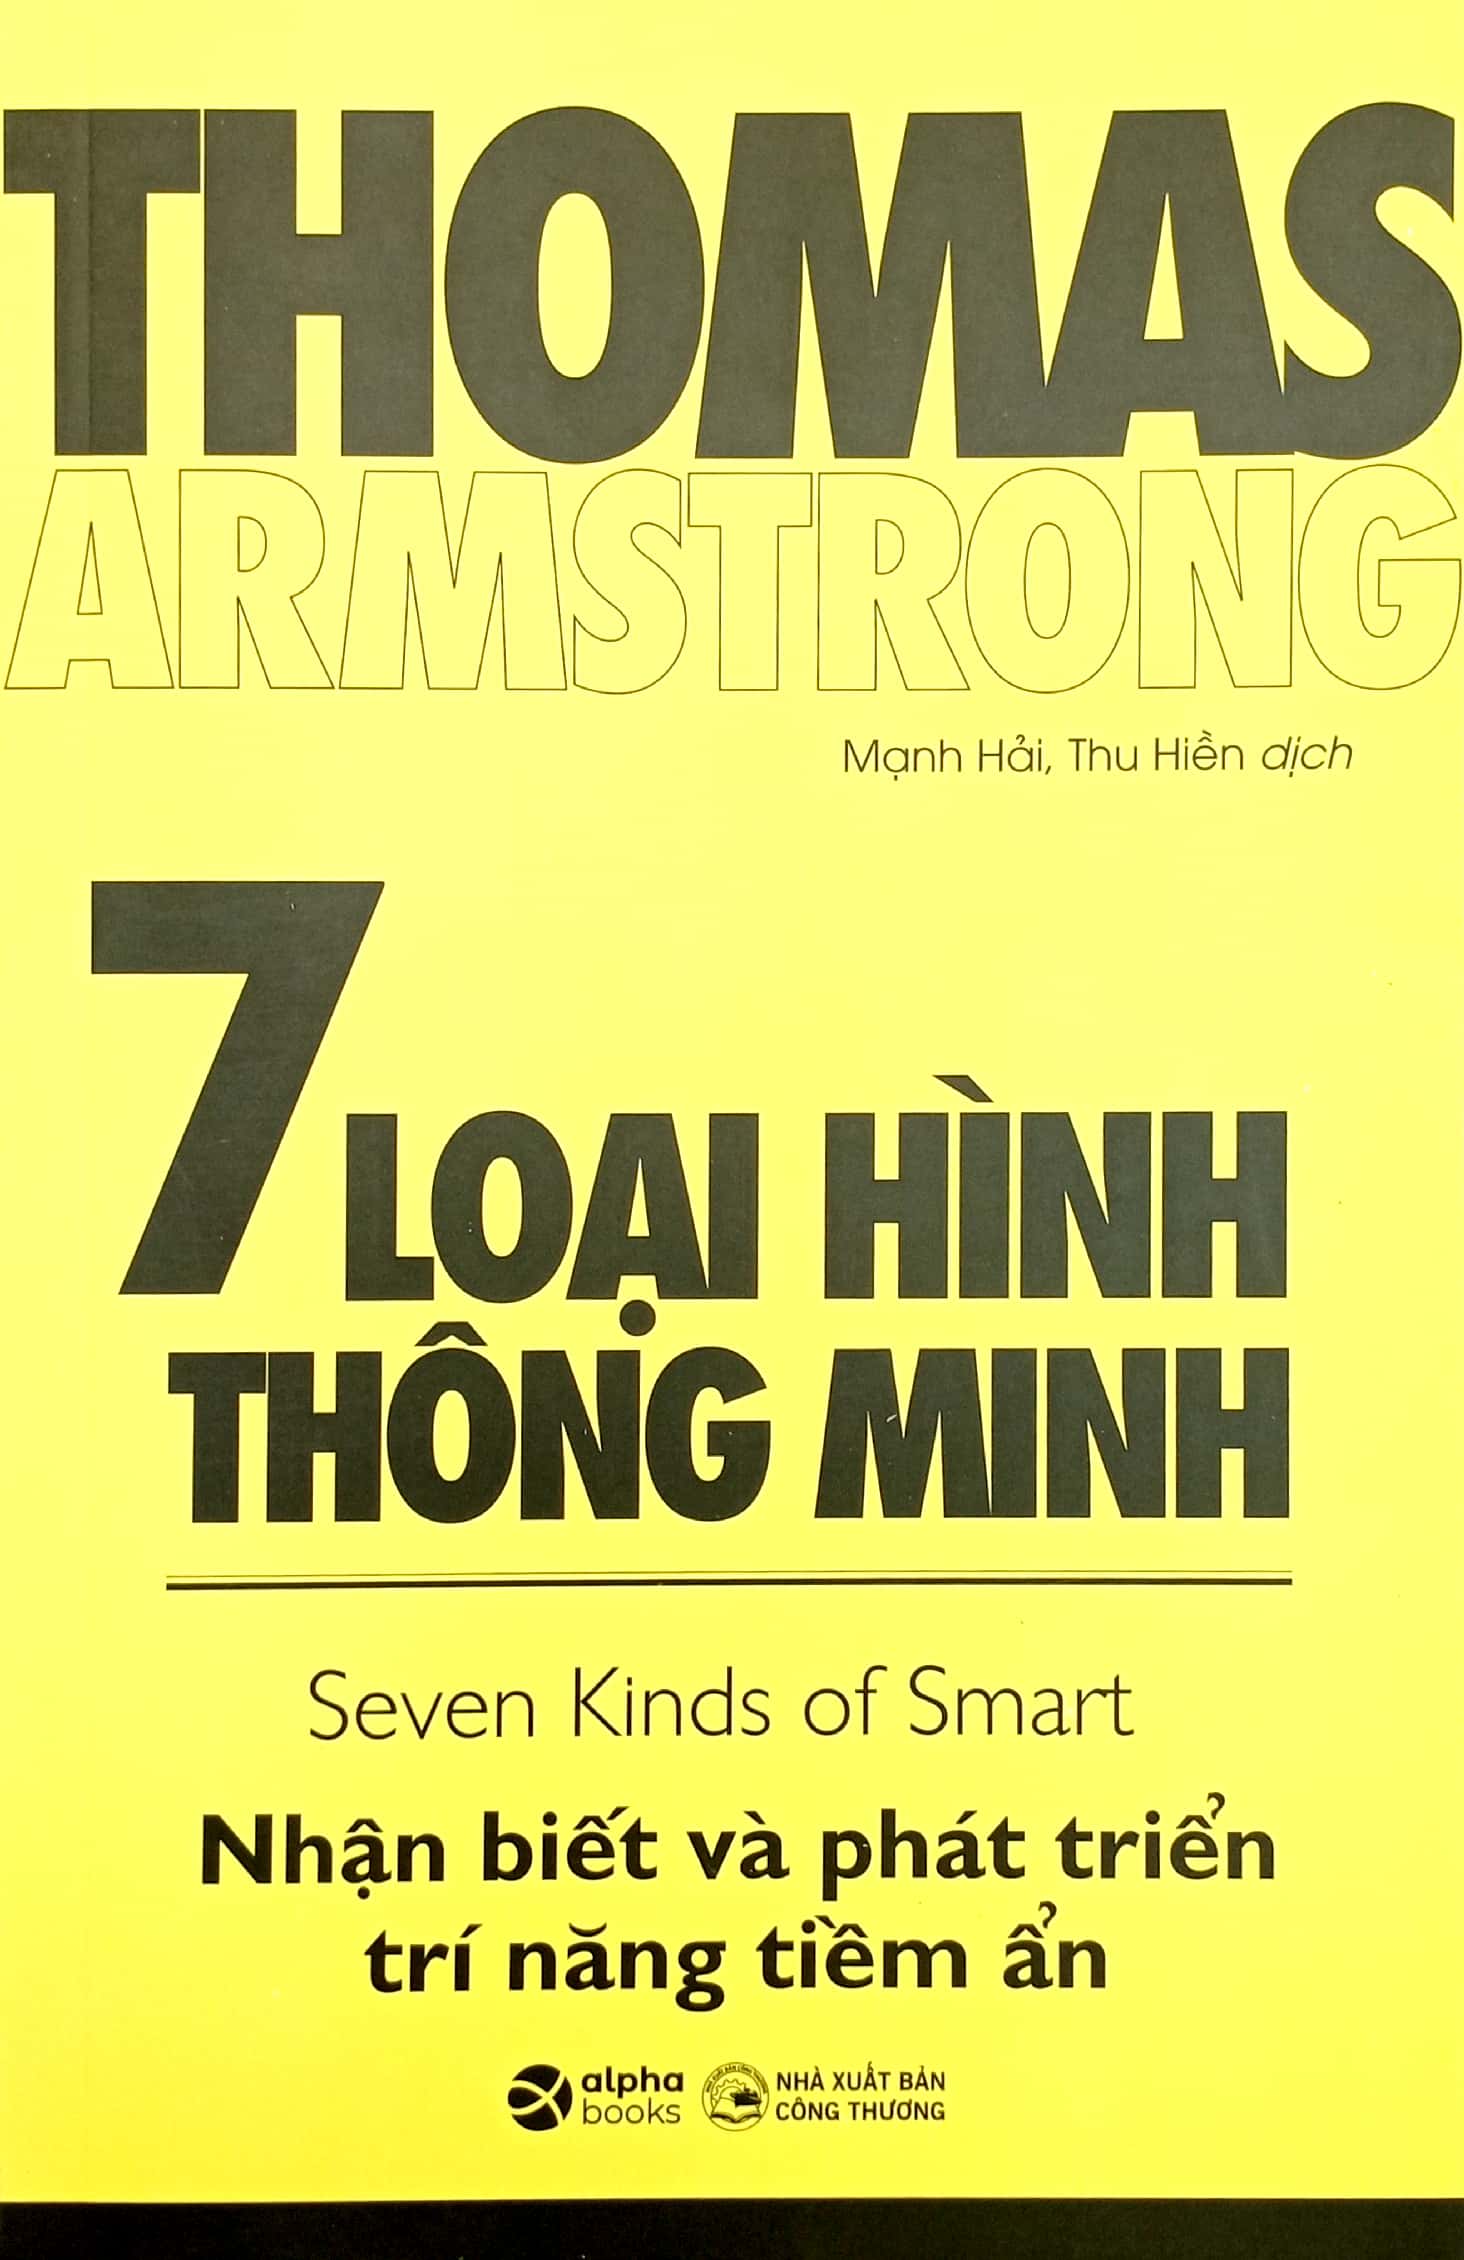 7 Loai Hinh Thong Minh Min